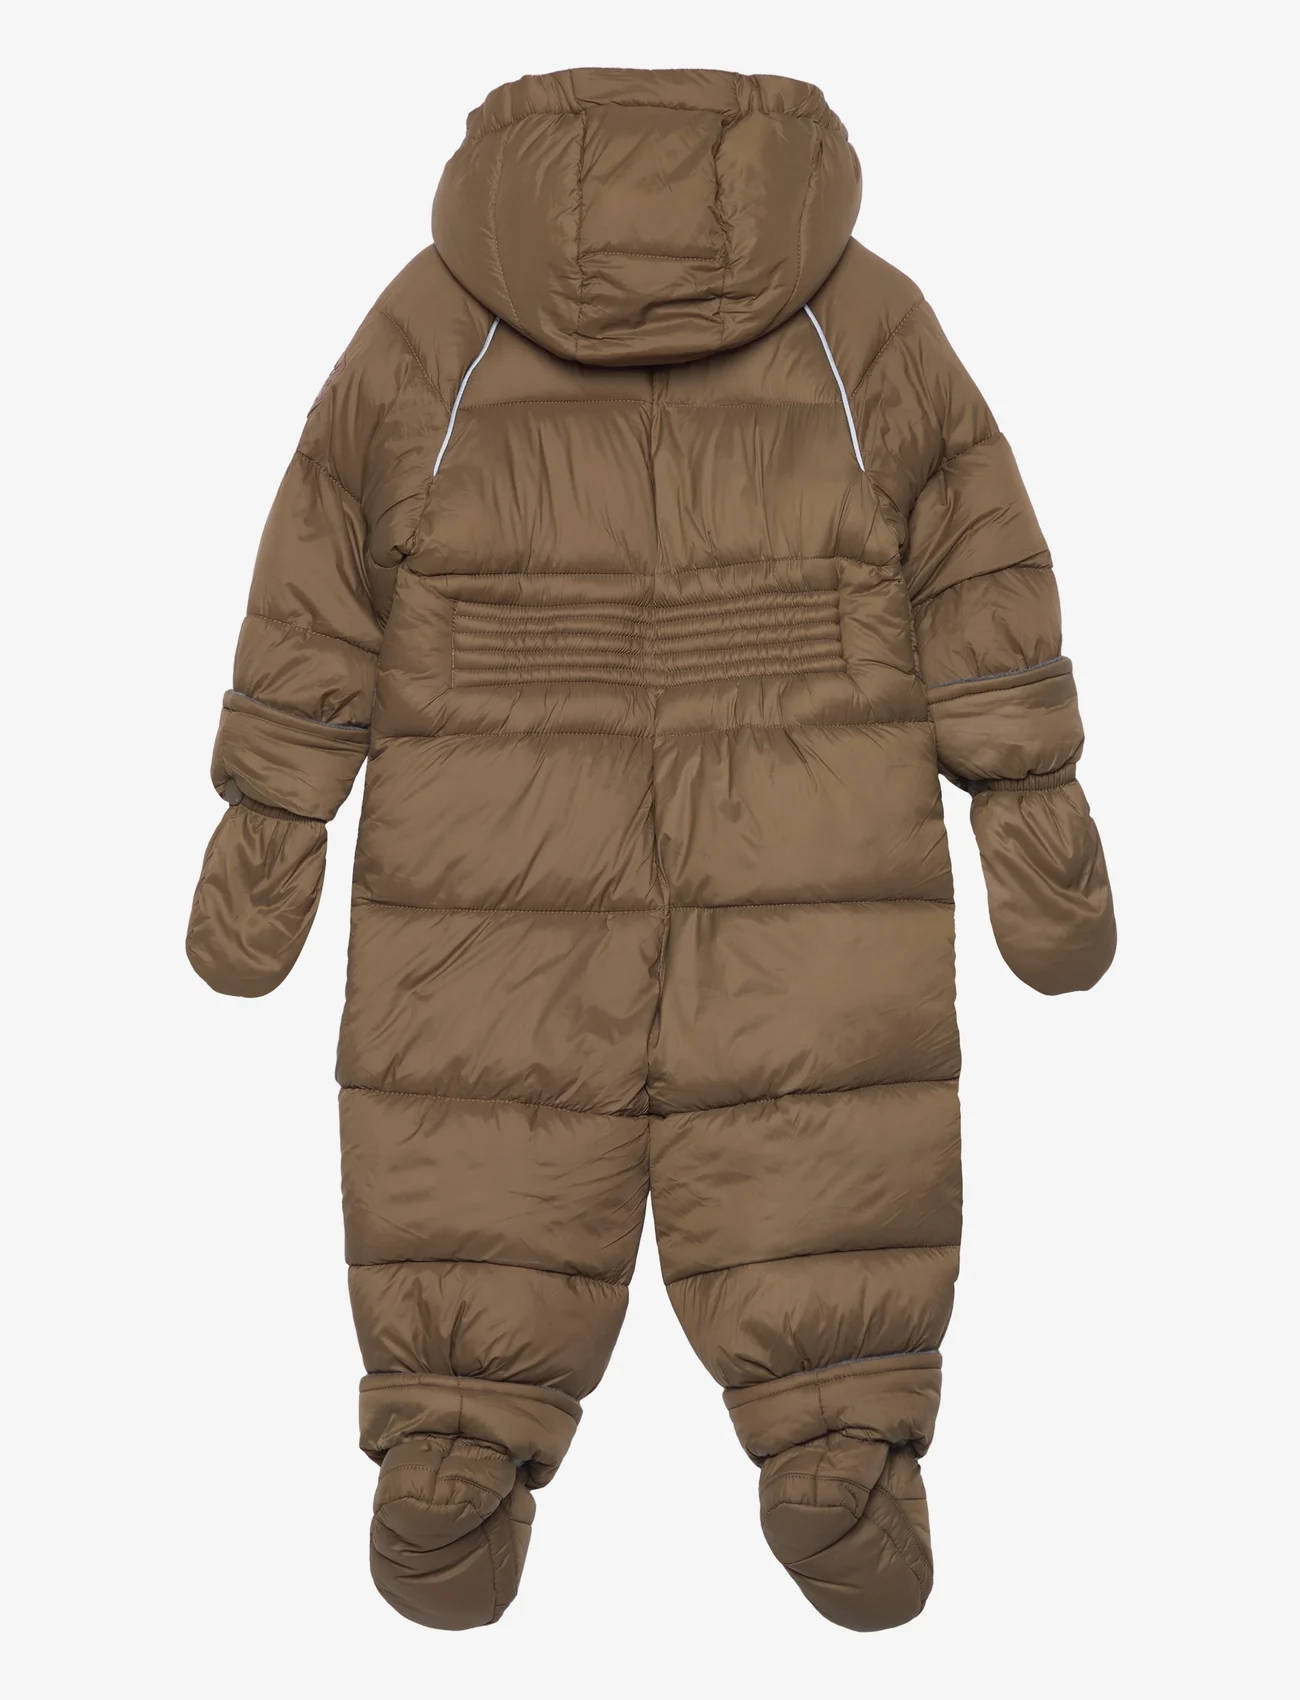 mikk-line - Puff Baby Suit w Acc Rec. - talvihaalari - beech - 1